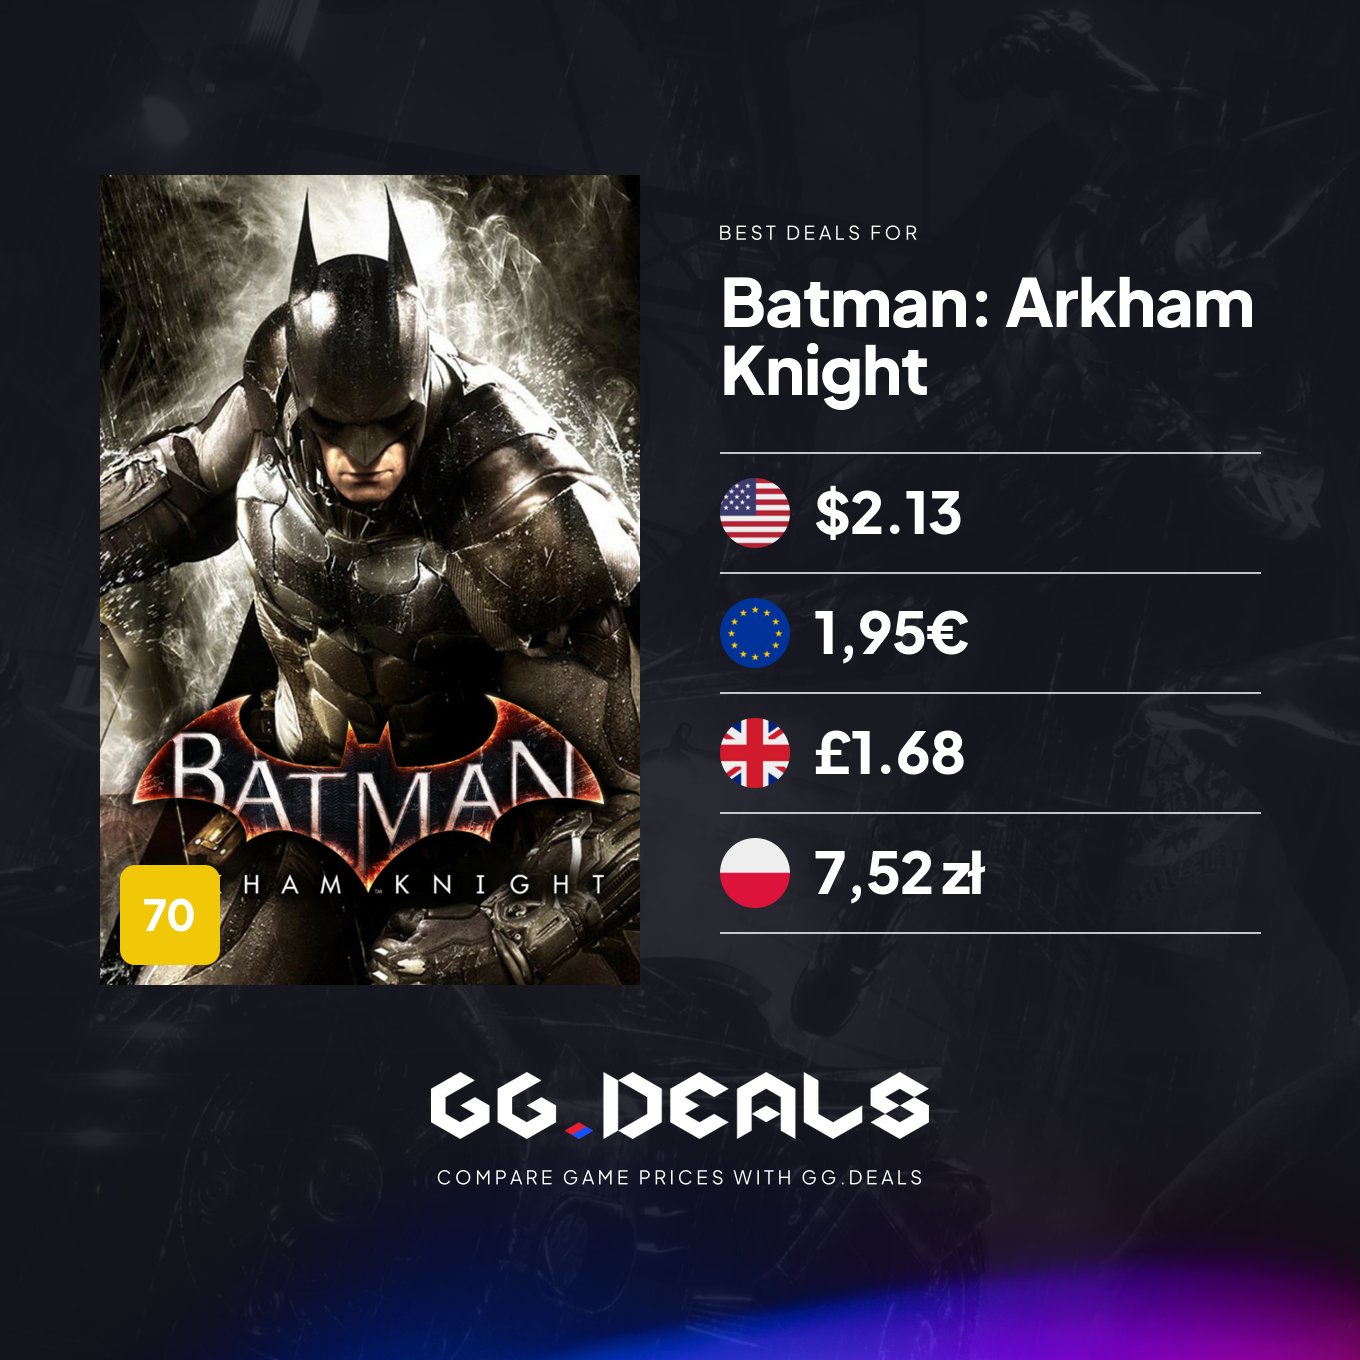 Buy Batman Arkham Knight Steam Key for Cheaper Price!